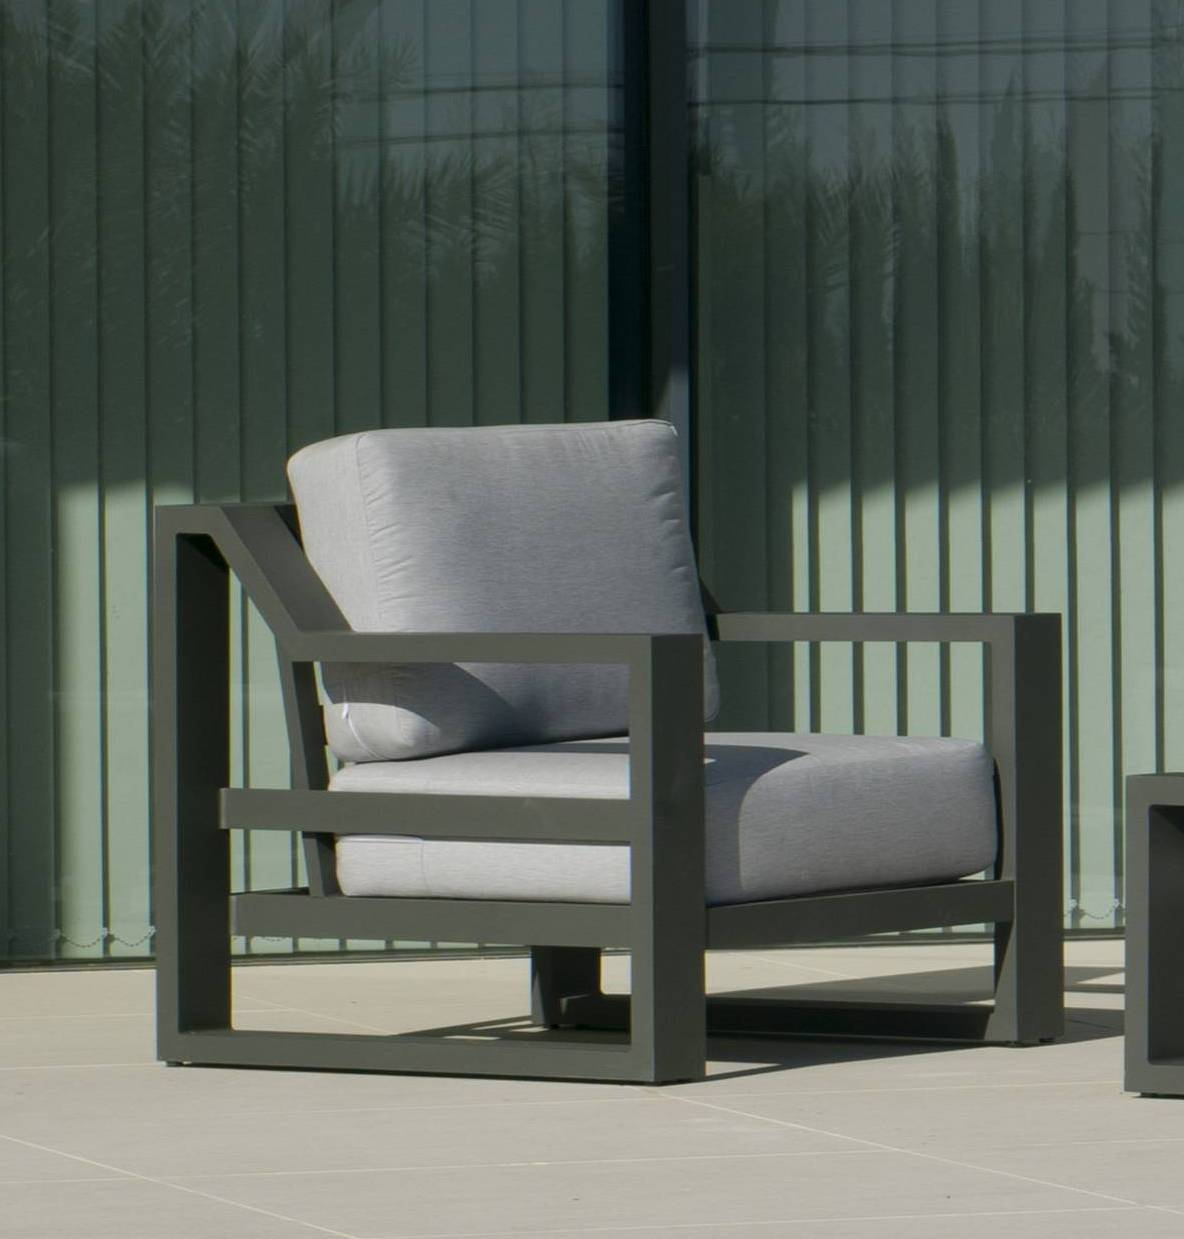 Set Aluminio Luxe Rosenborg-8 - Conjunto lujo para jardín: 1 sofá de 3 plazas + 2 sillones + 1 mesa de centro + cojines. Estructura de alumino reforzado color blanco, antracita o champagne.